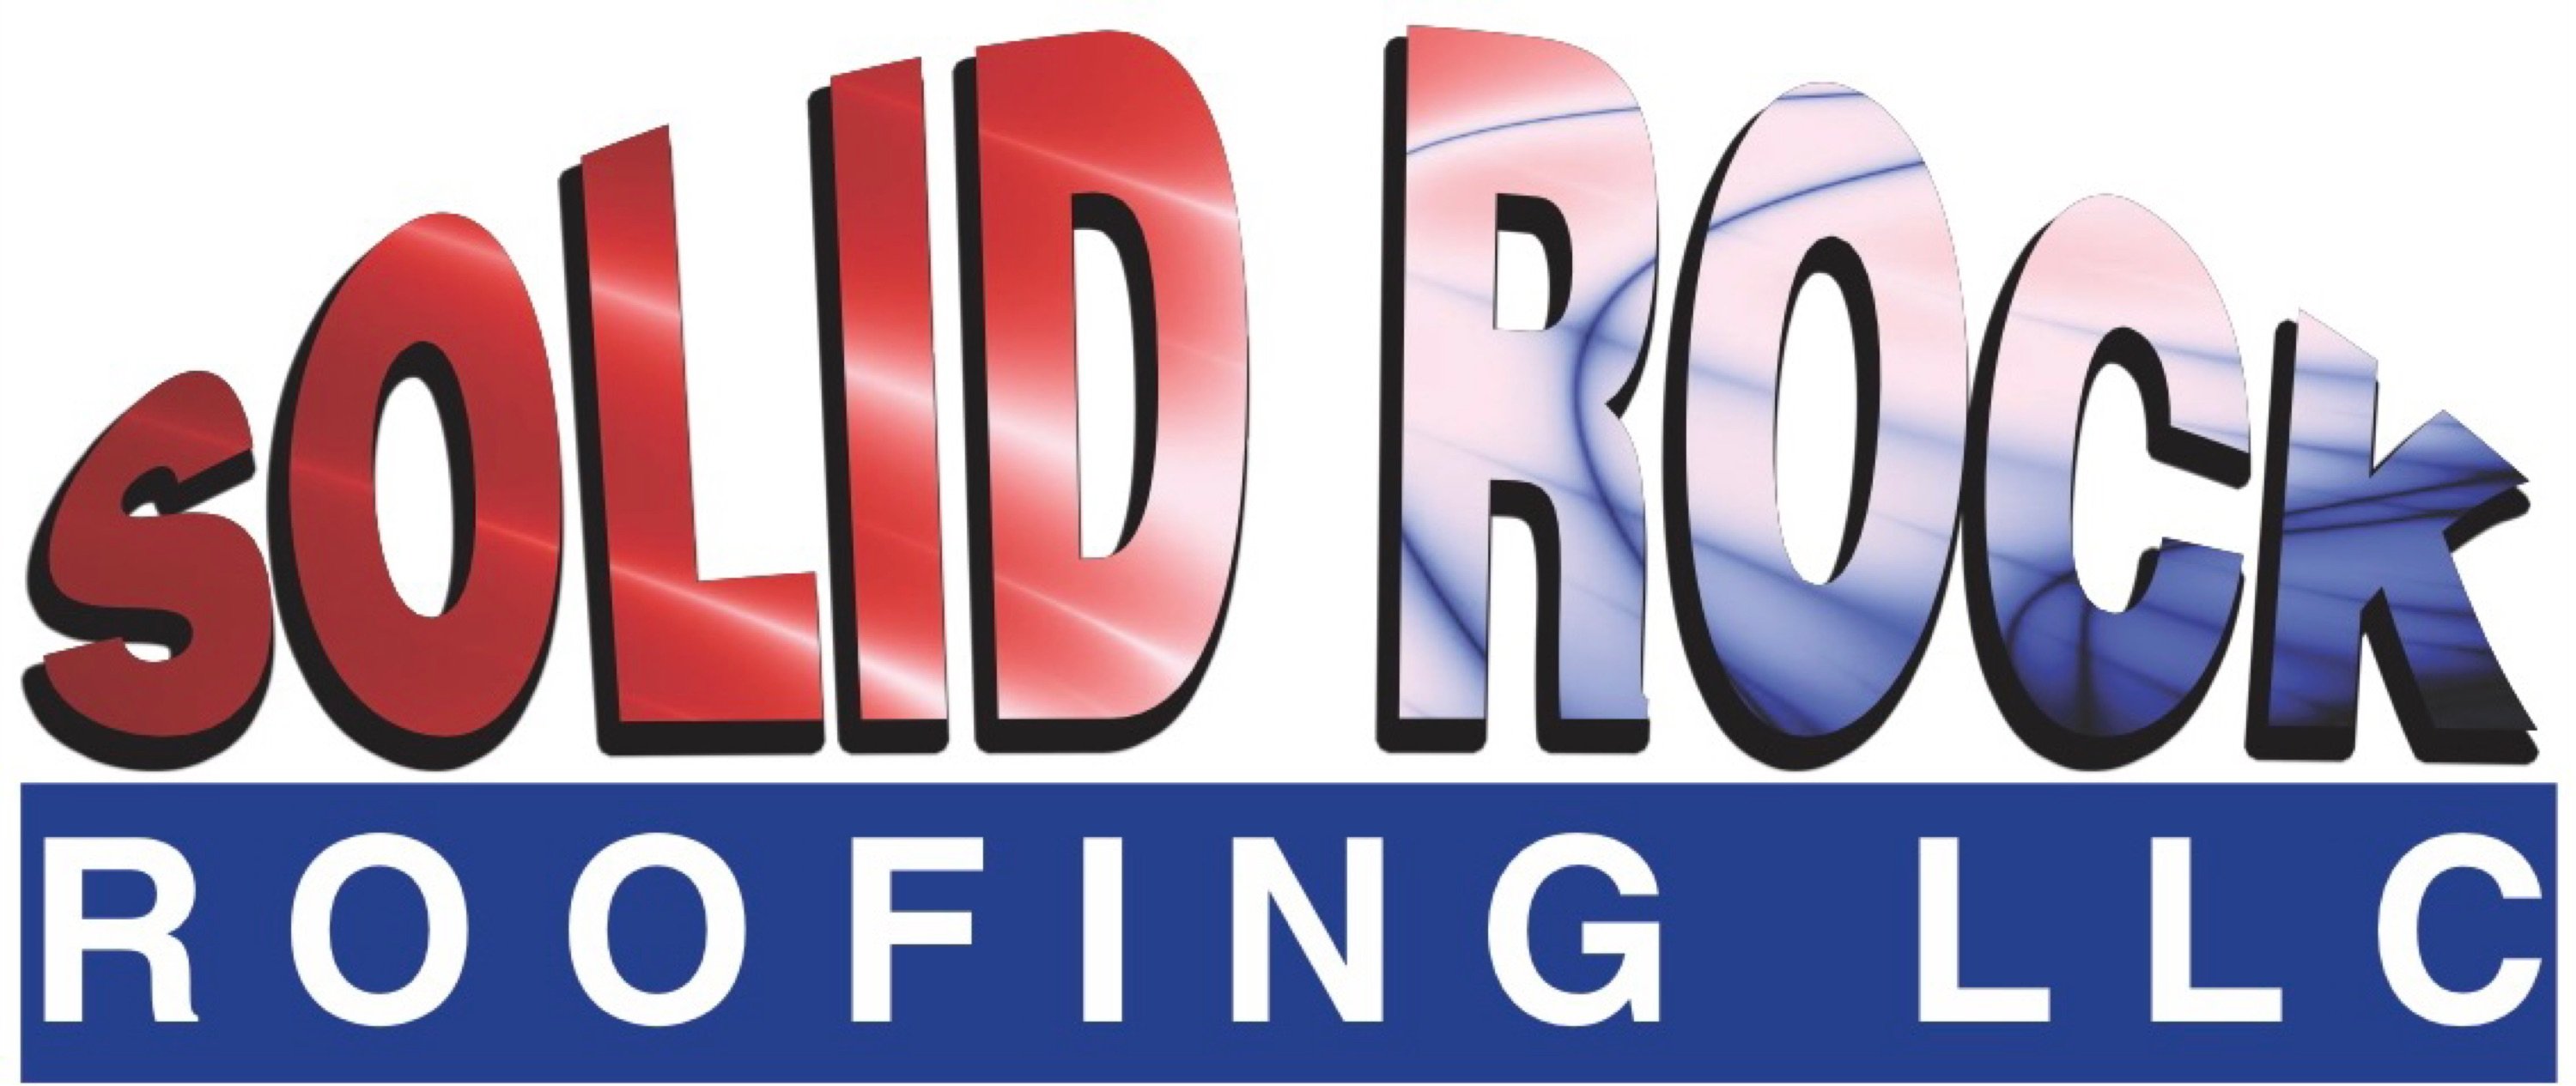 Solid Rock Roofing, LLC Logo